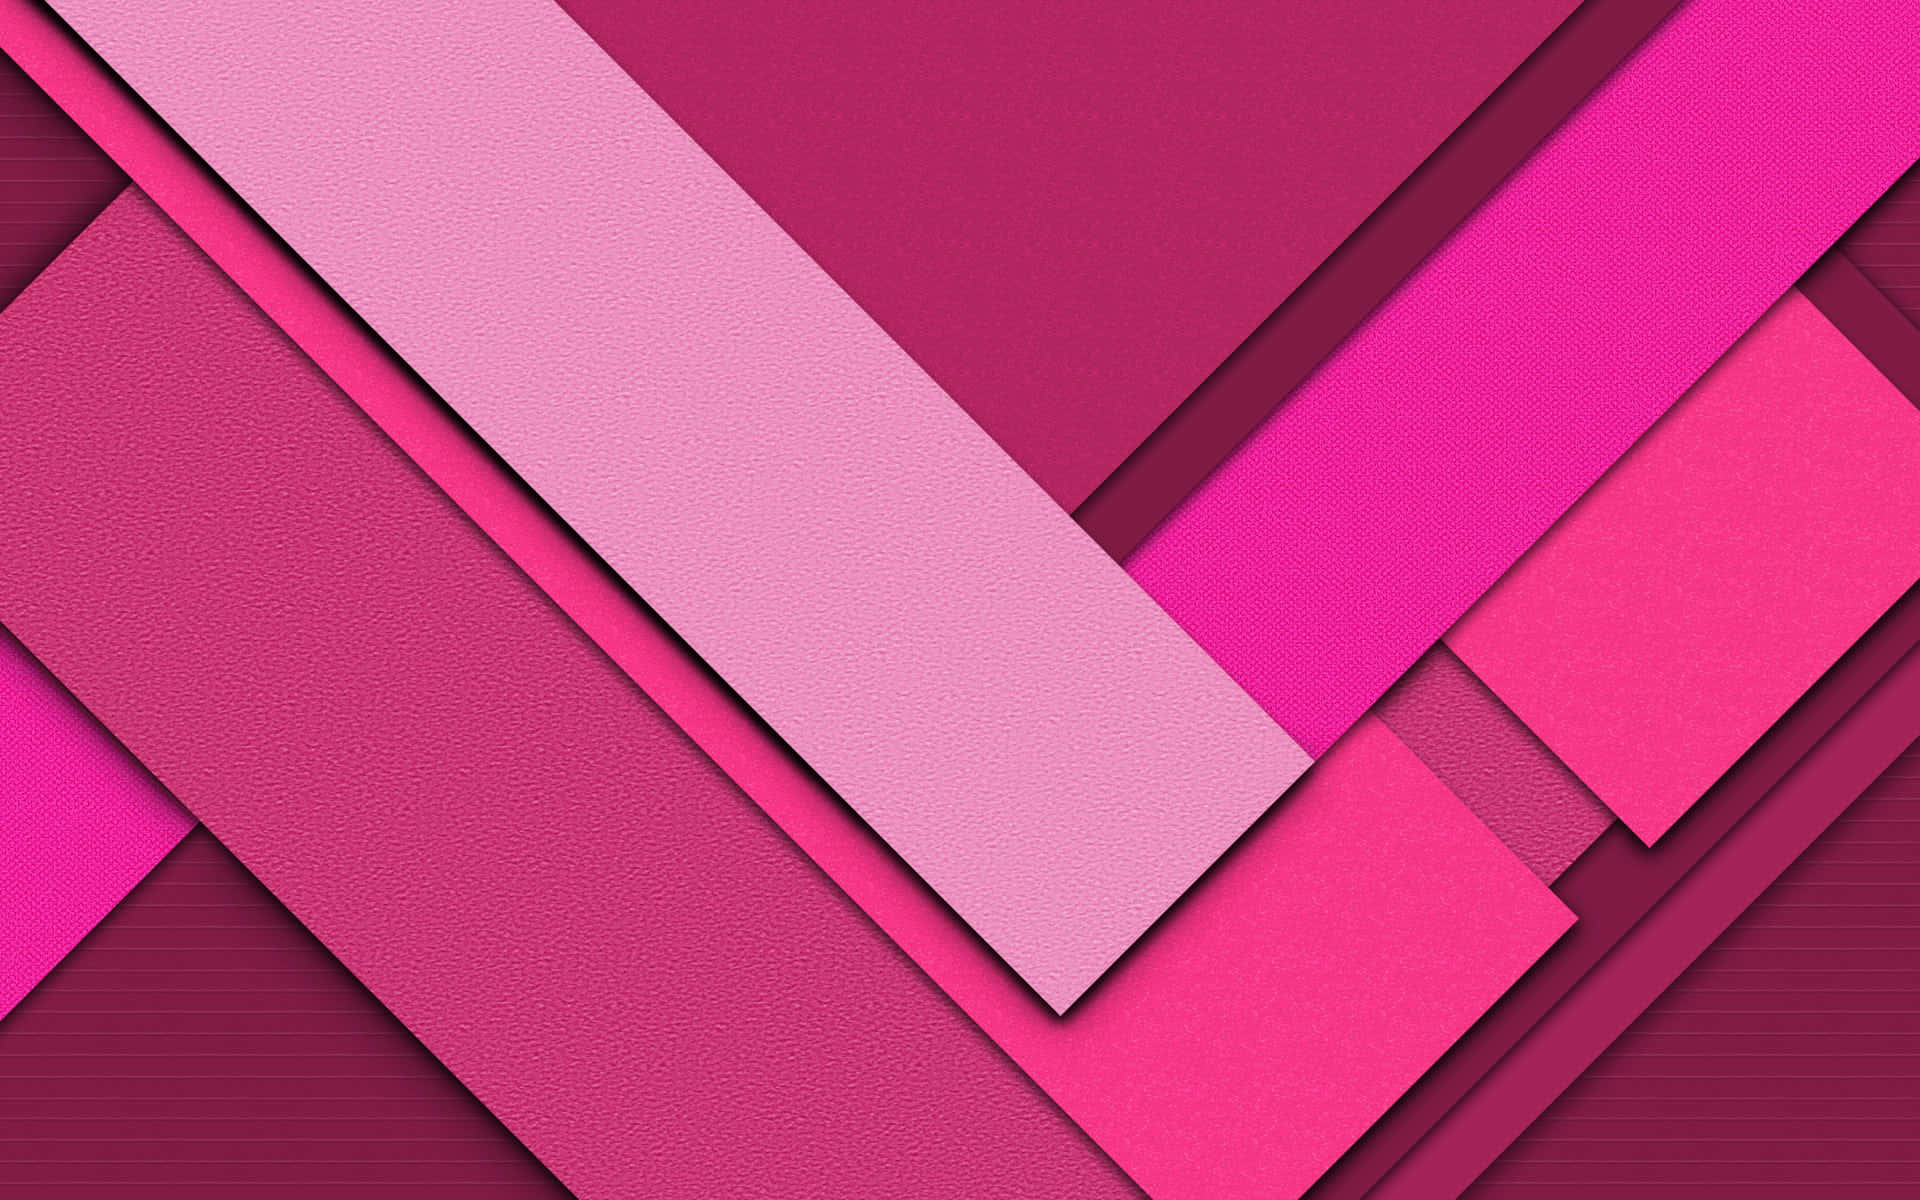 "Abstract shapes and shades of pink"